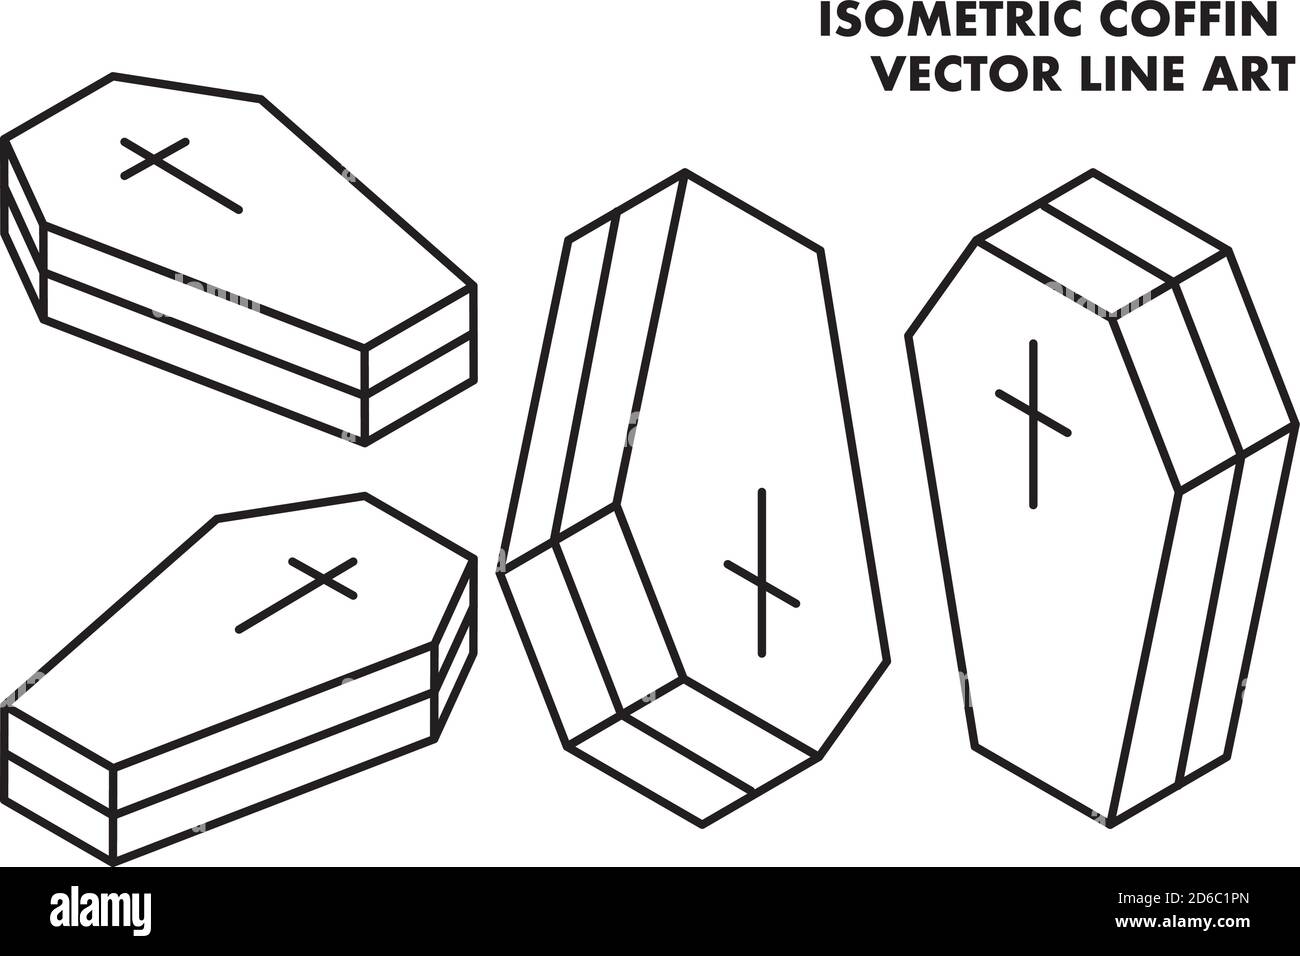 Isometric Coffin Vector Line Art Set Stock Vector